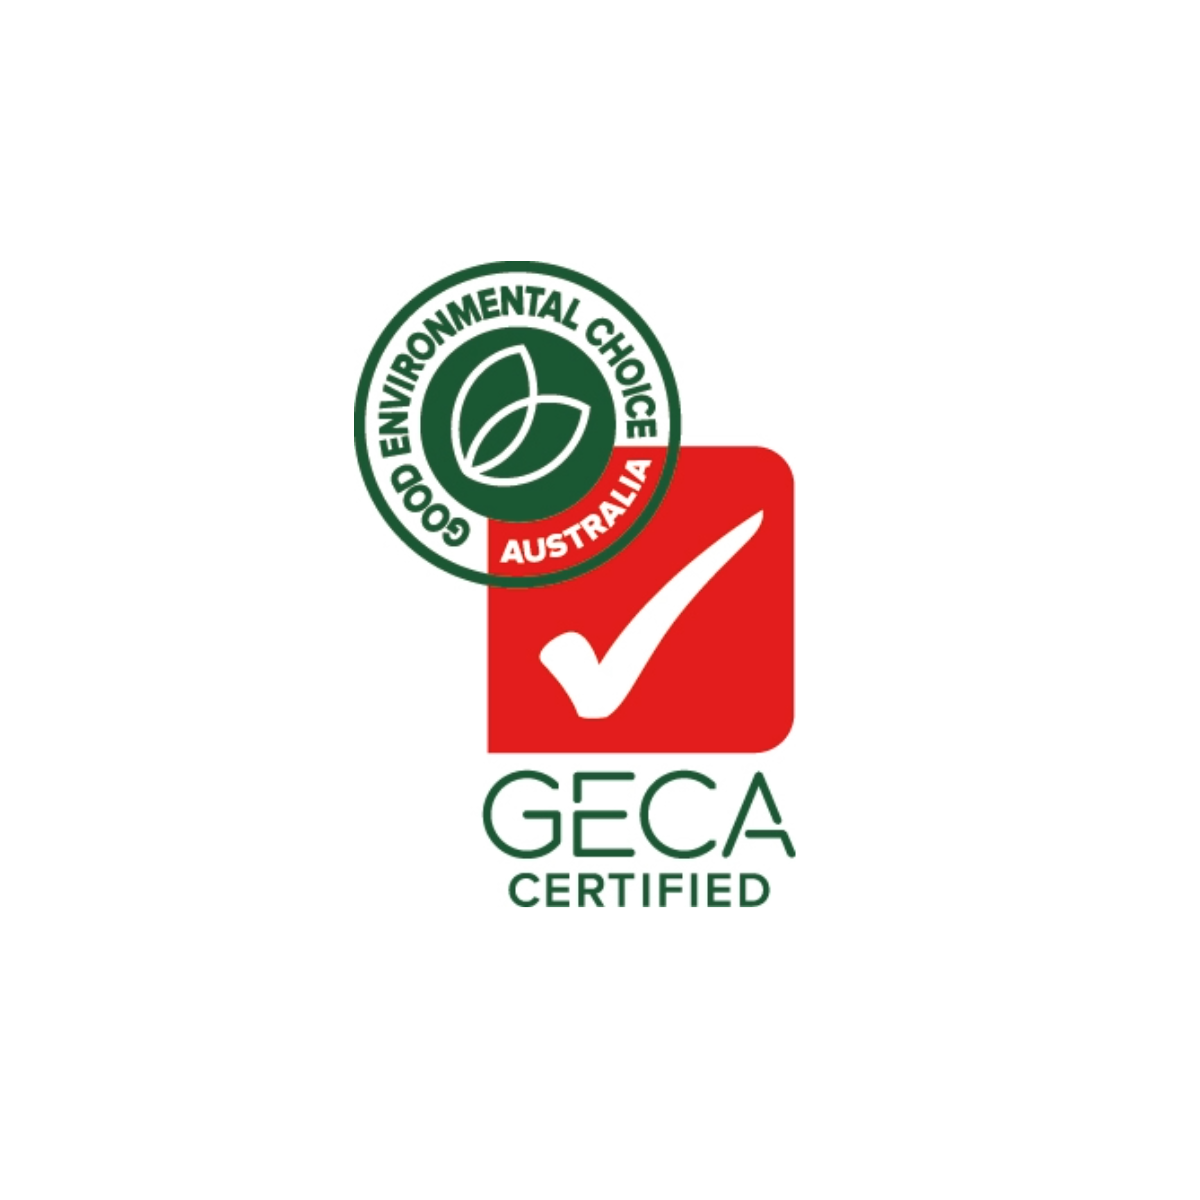 GECA Certified Logo